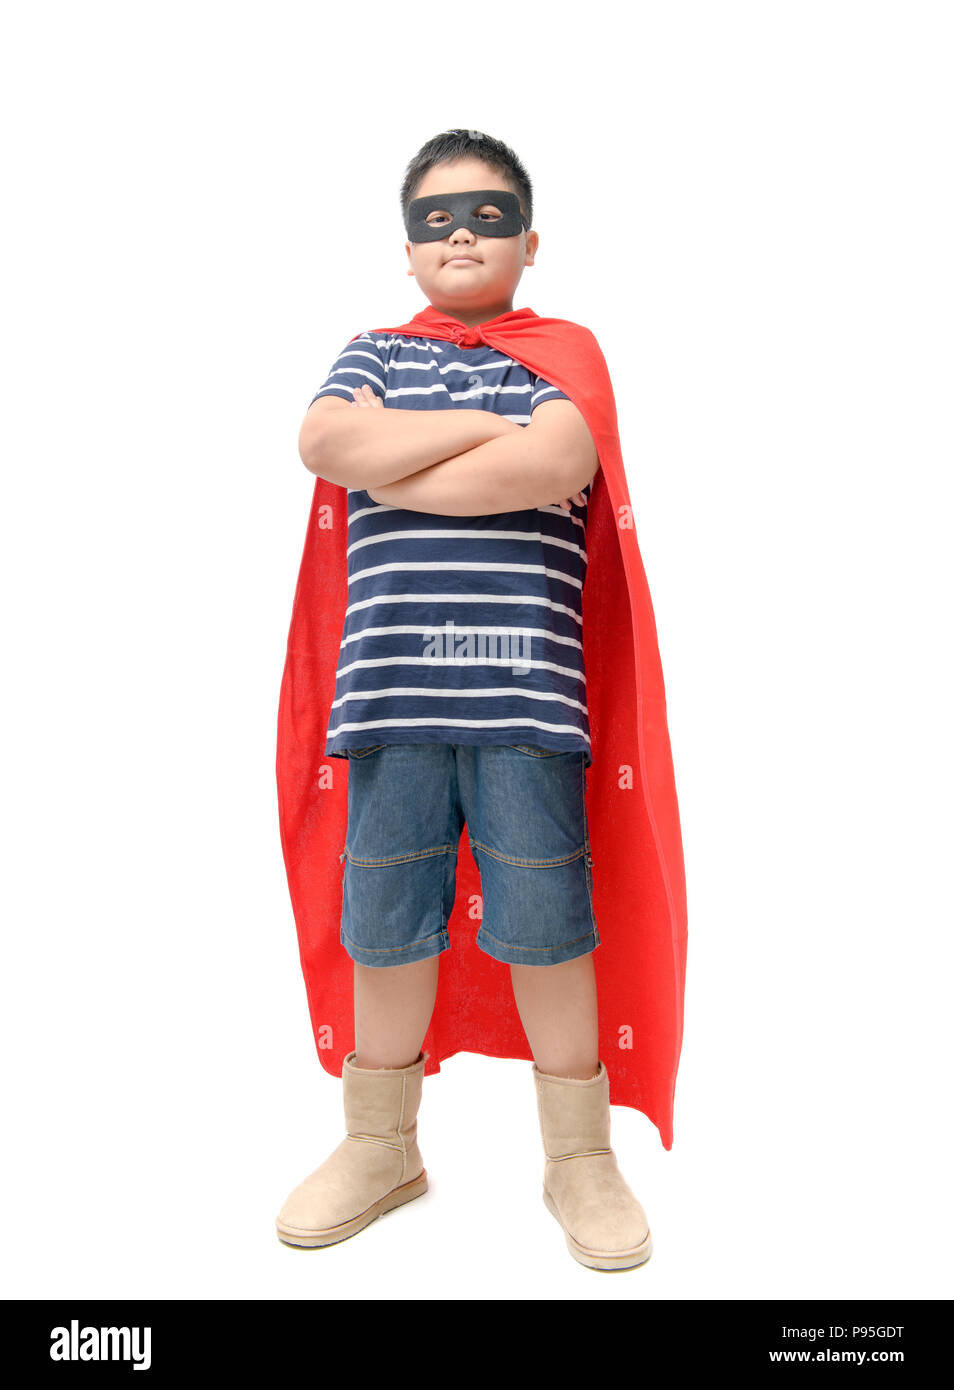 Fat child plays superhero isolated on white background, Boy power concept. Stock Photo